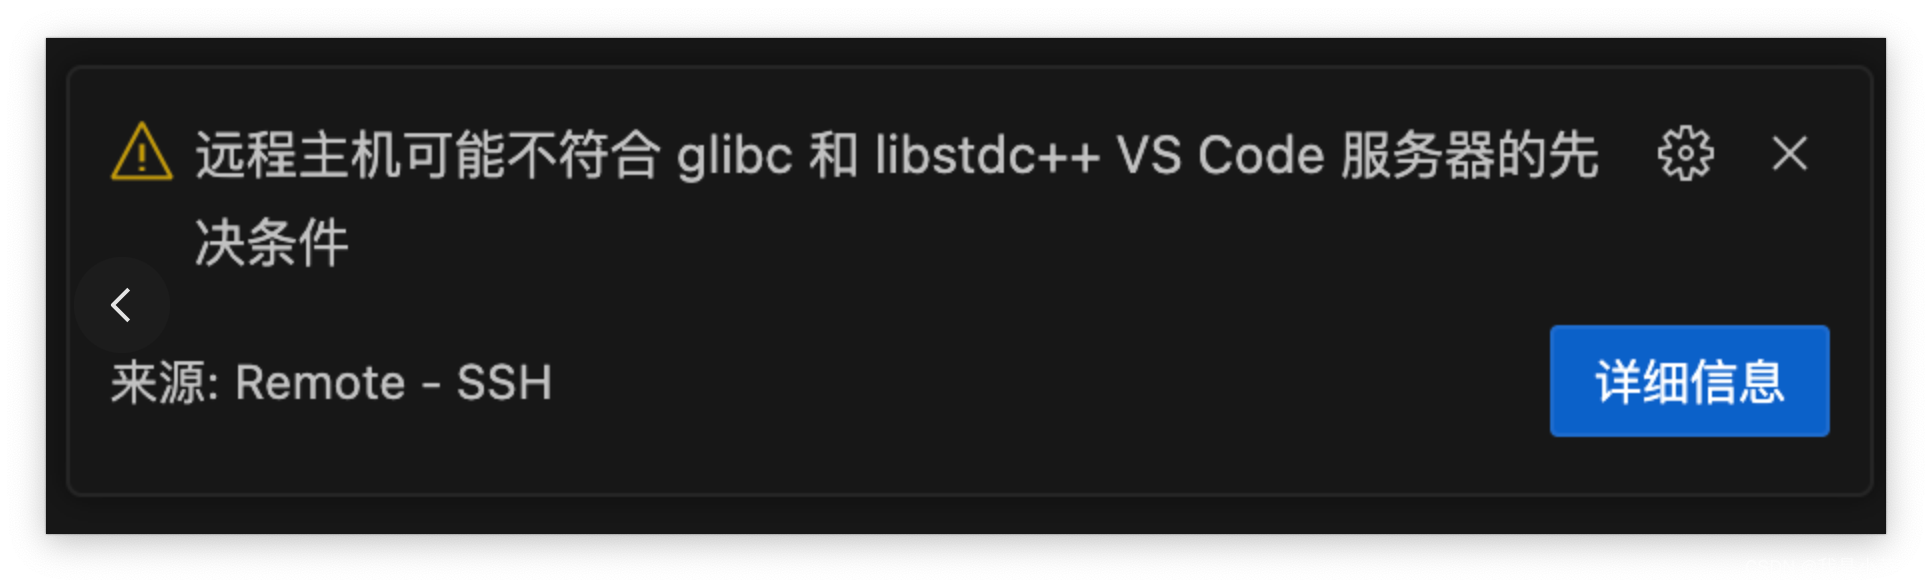 vscode的ssh忽然连不上服务器：远程主机可能不符合glibc和libstdc++ VS Code服务器的先决条件